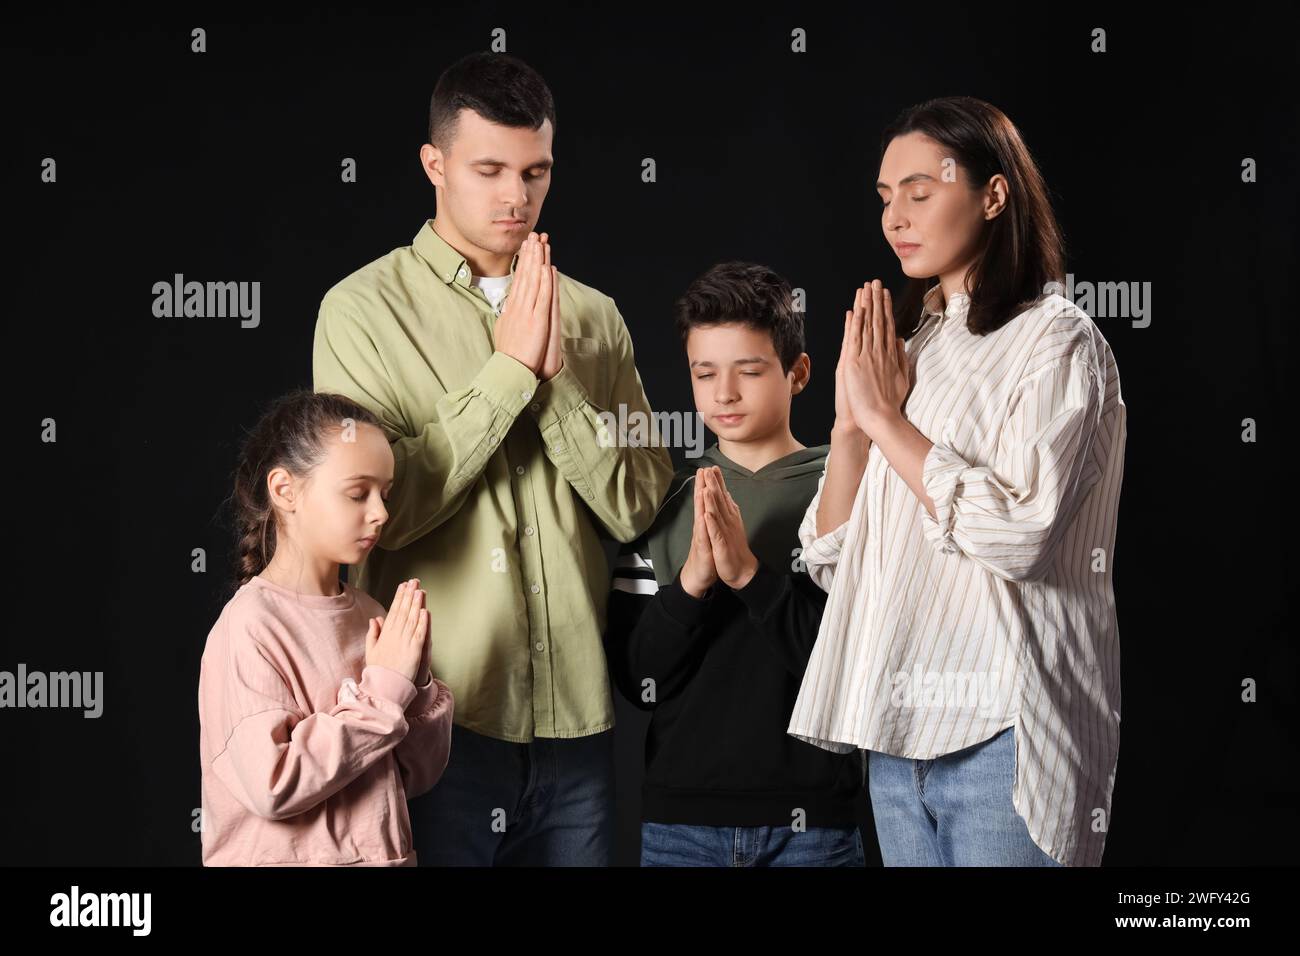 Family praying together on dark background Stock Photo